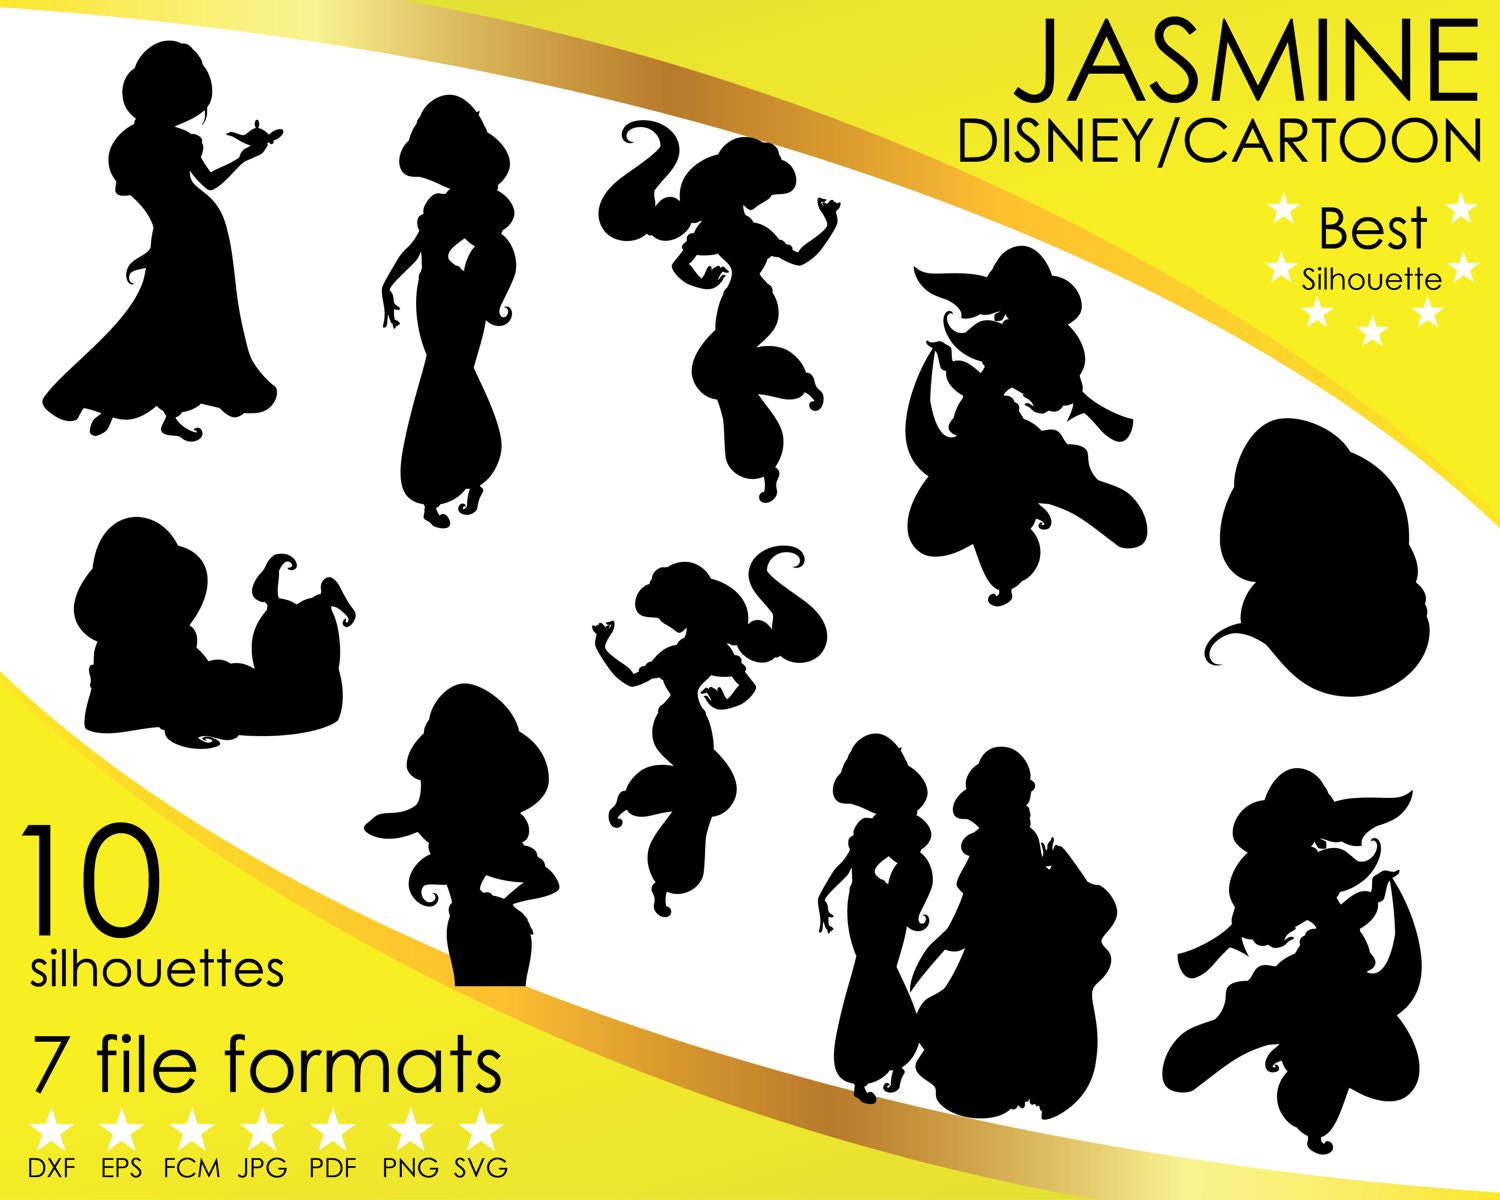 10 Silhouettes Jasmine Aladdin Princess Disney Cartoon